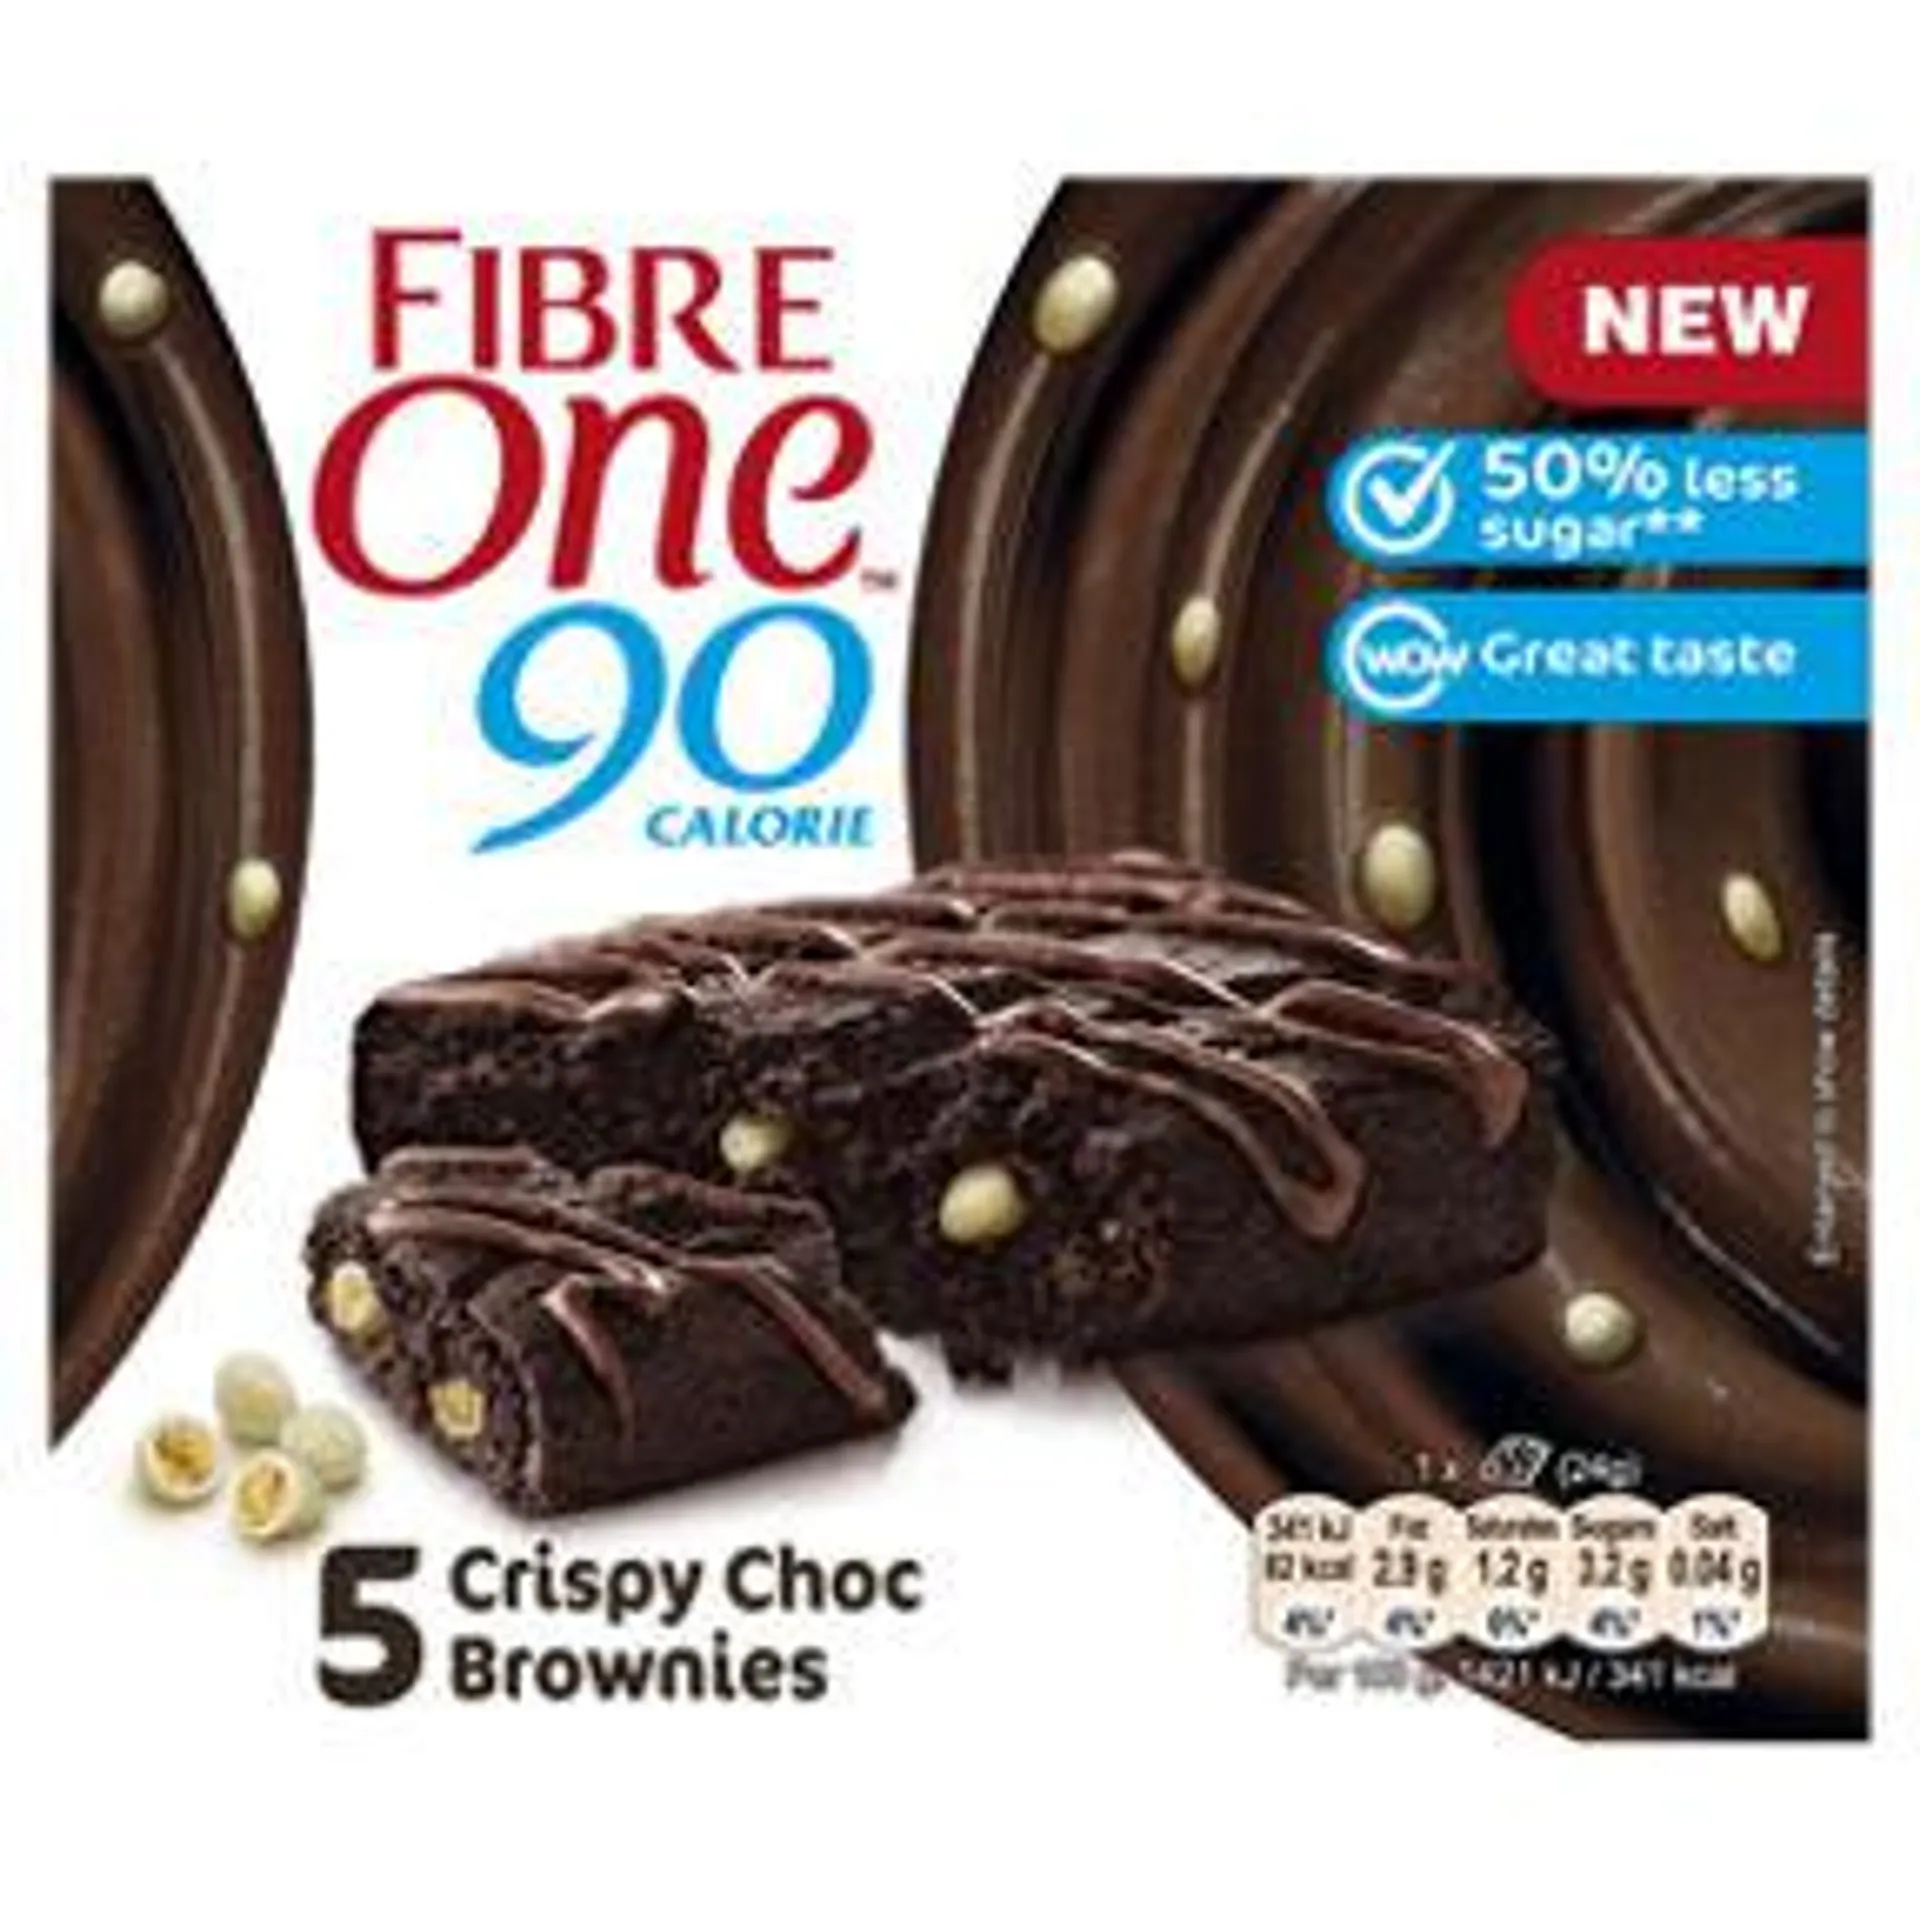 Fibre One 90 Calorie Crispy Choc Brownies